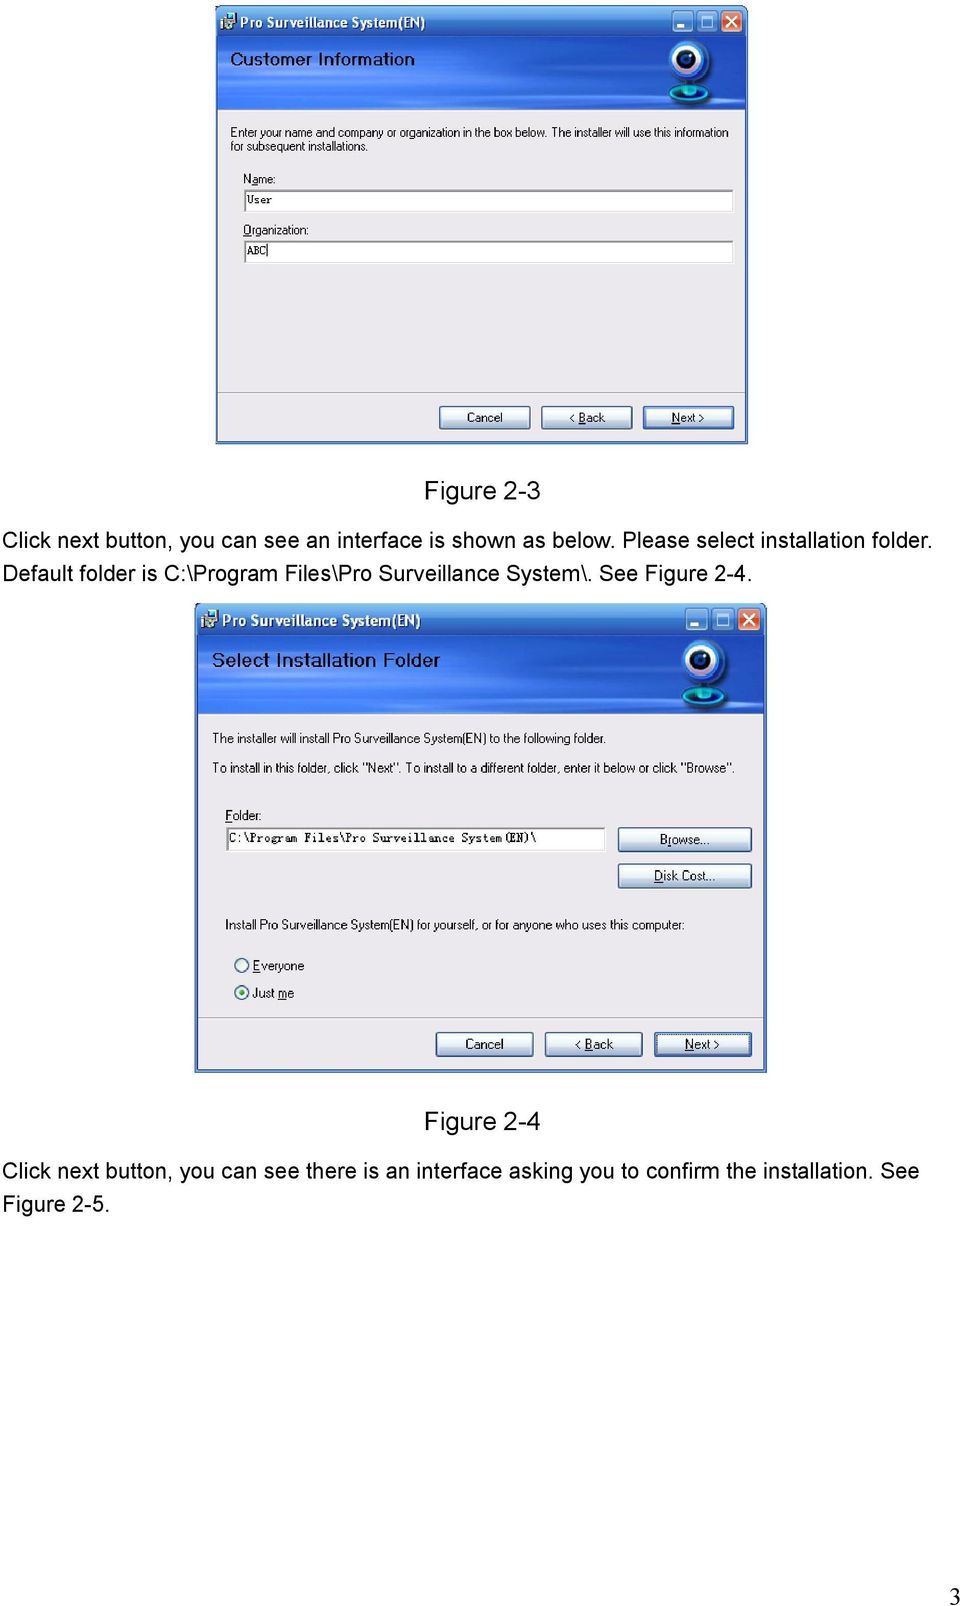 Default folder is C:\Program Files\Pro Surveillance System\. See Figure 2-4.